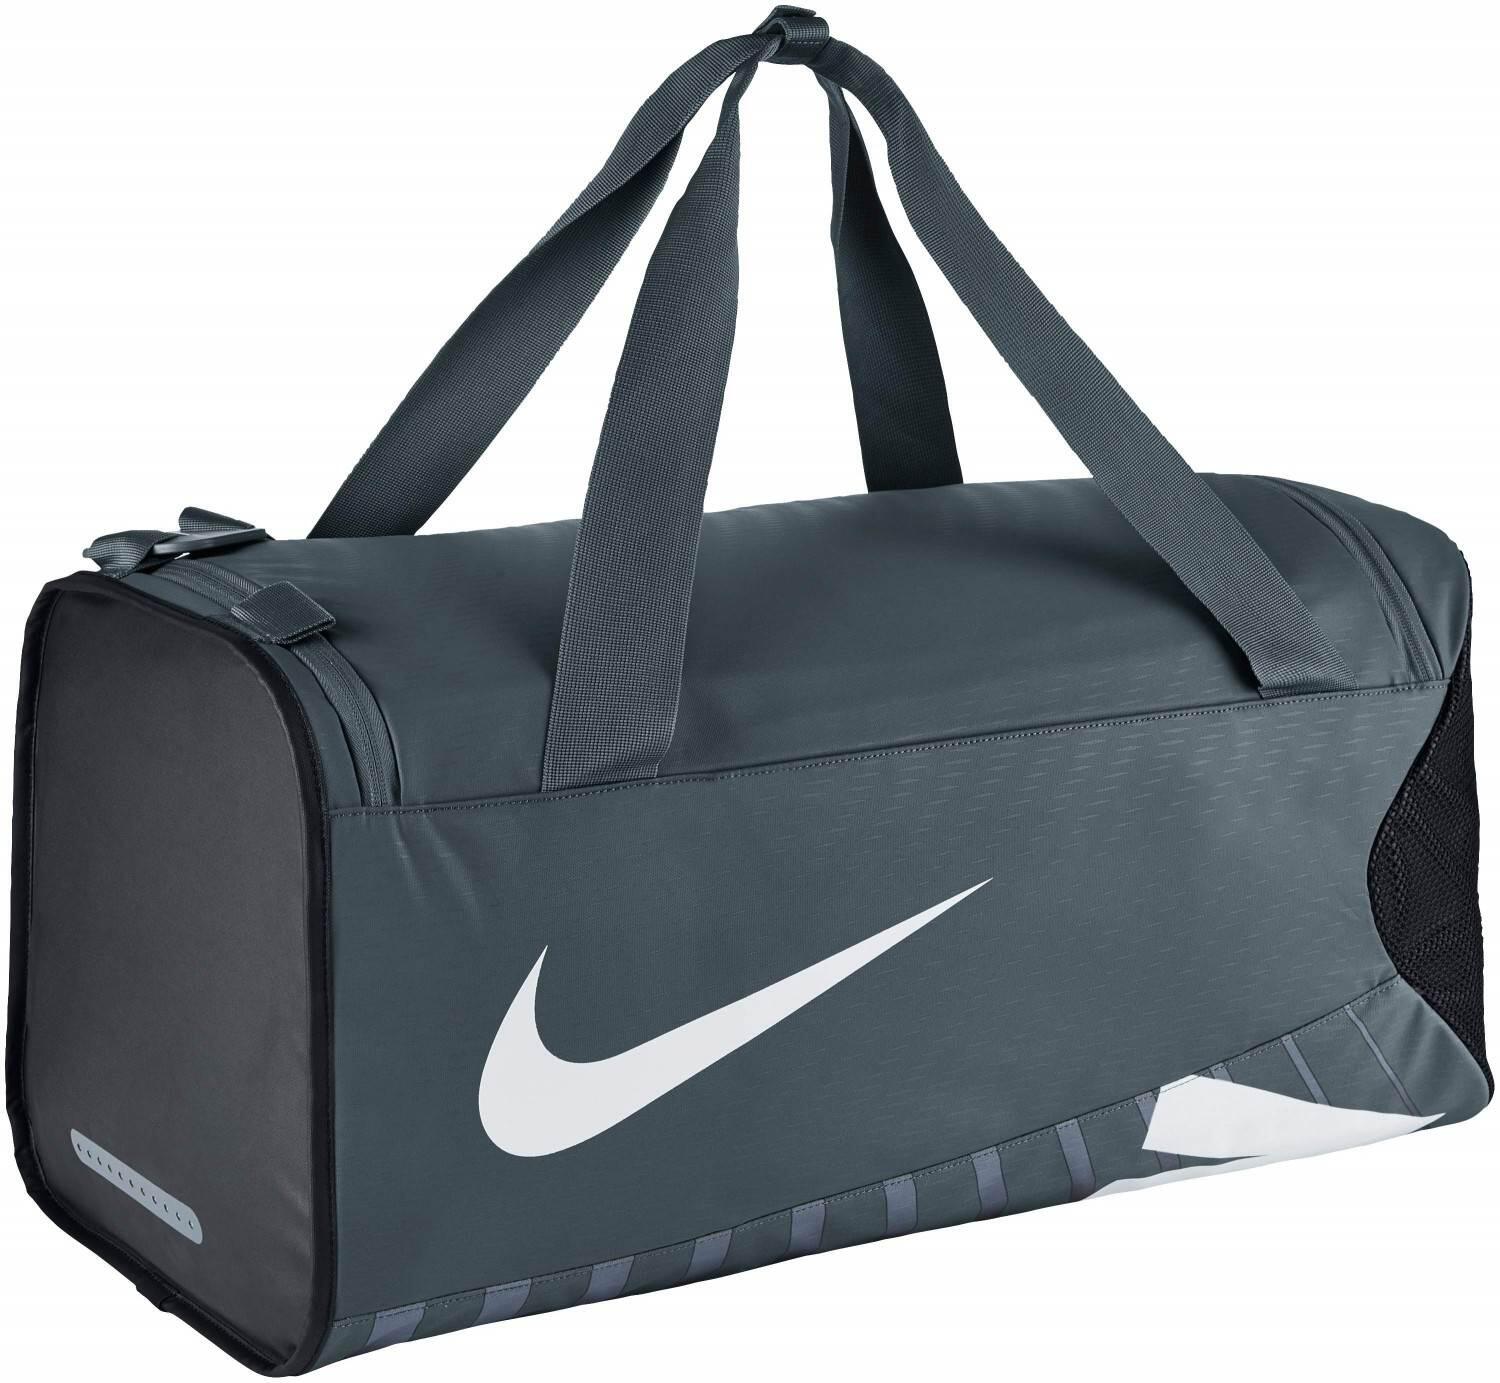 Nike Duffel Medium Sporttasche (Farbe: 064 flint grey/black/white)